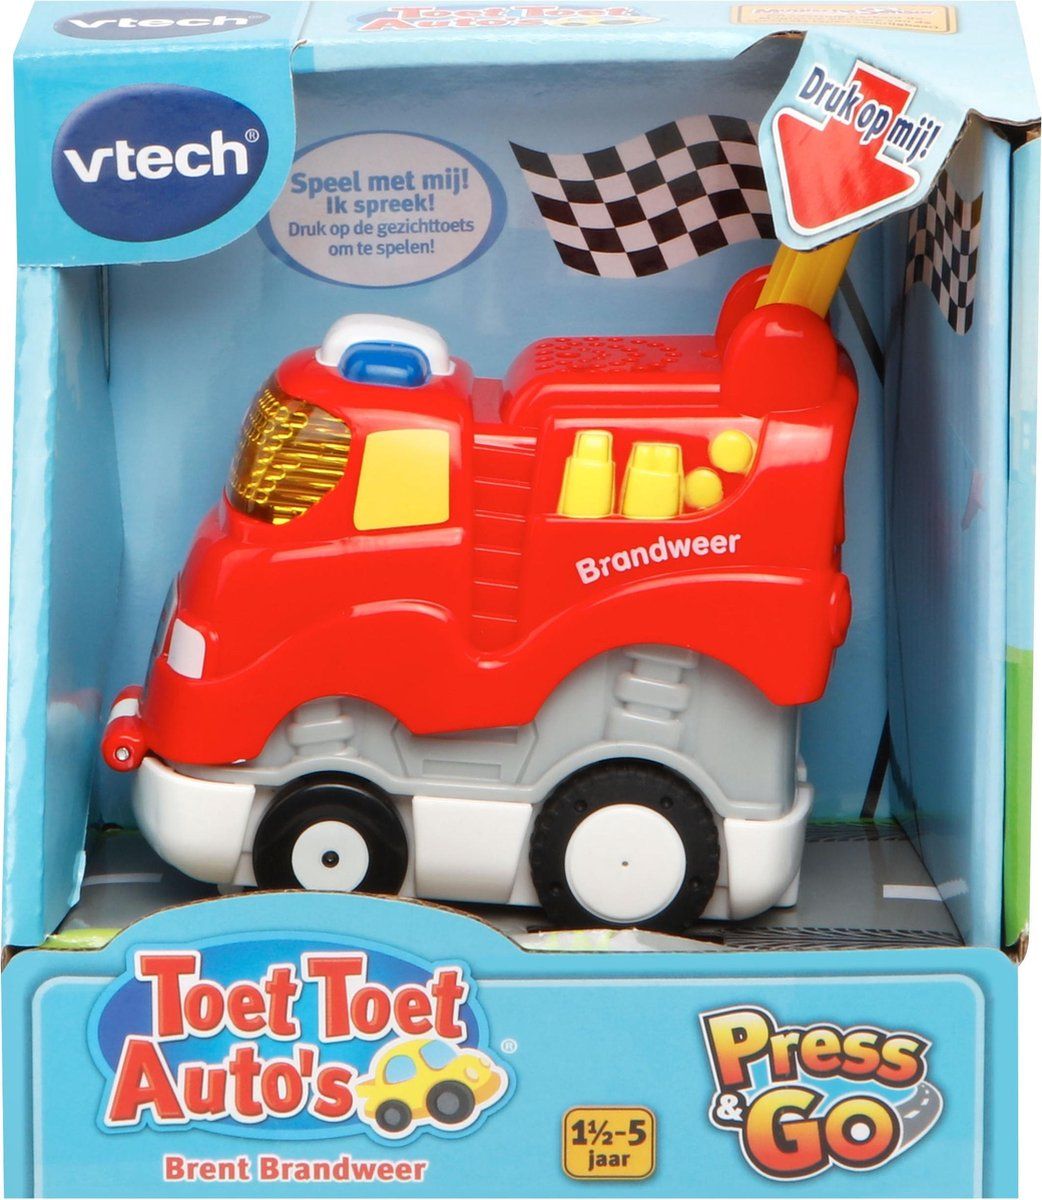 Vtech Toet Toet Auto Press & Go Brent Brandwee (80-500423-023) - B-Toys Keerbergen